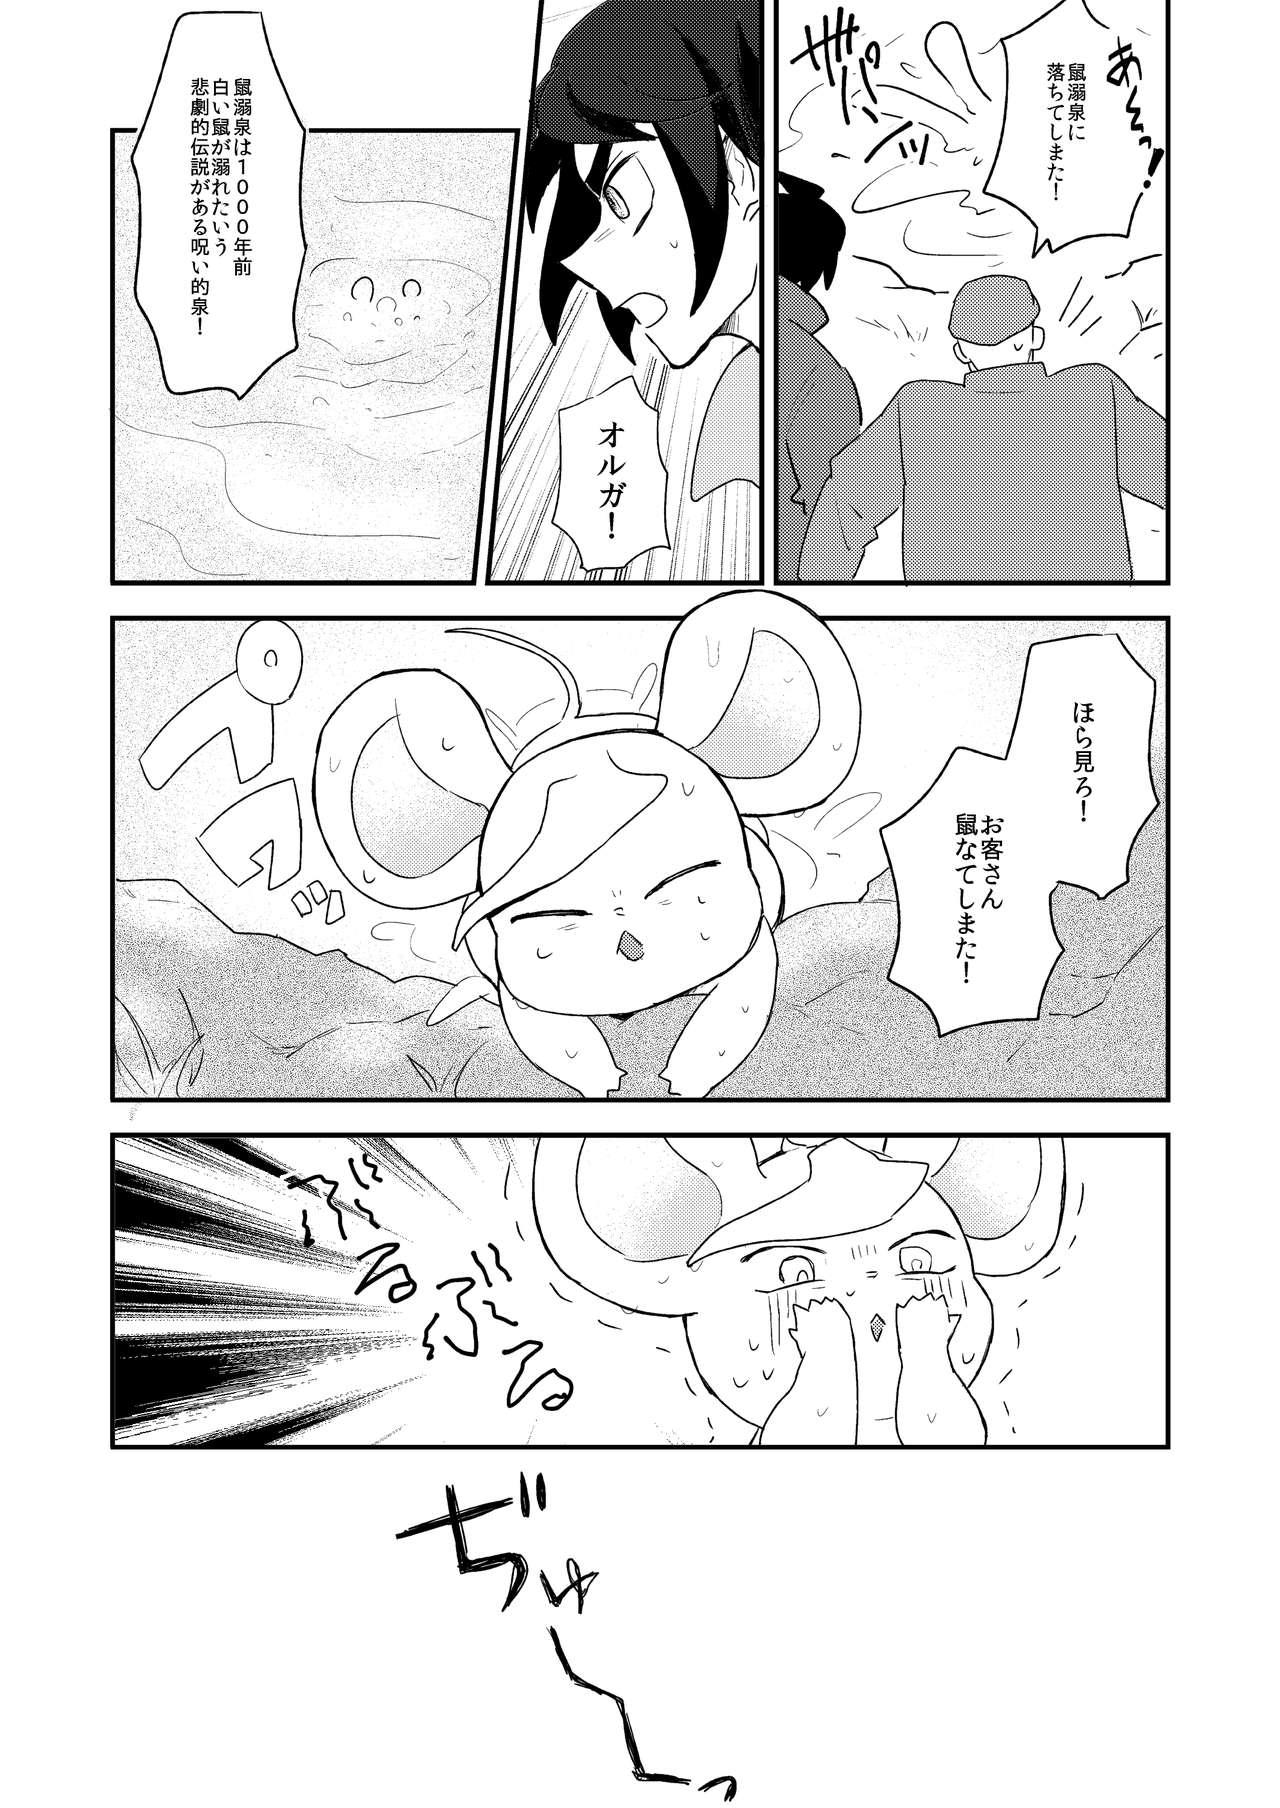 Penetration Orga Nibun no Iti - Mobile suit gundam tekketsu no orphans Casada - Page 5